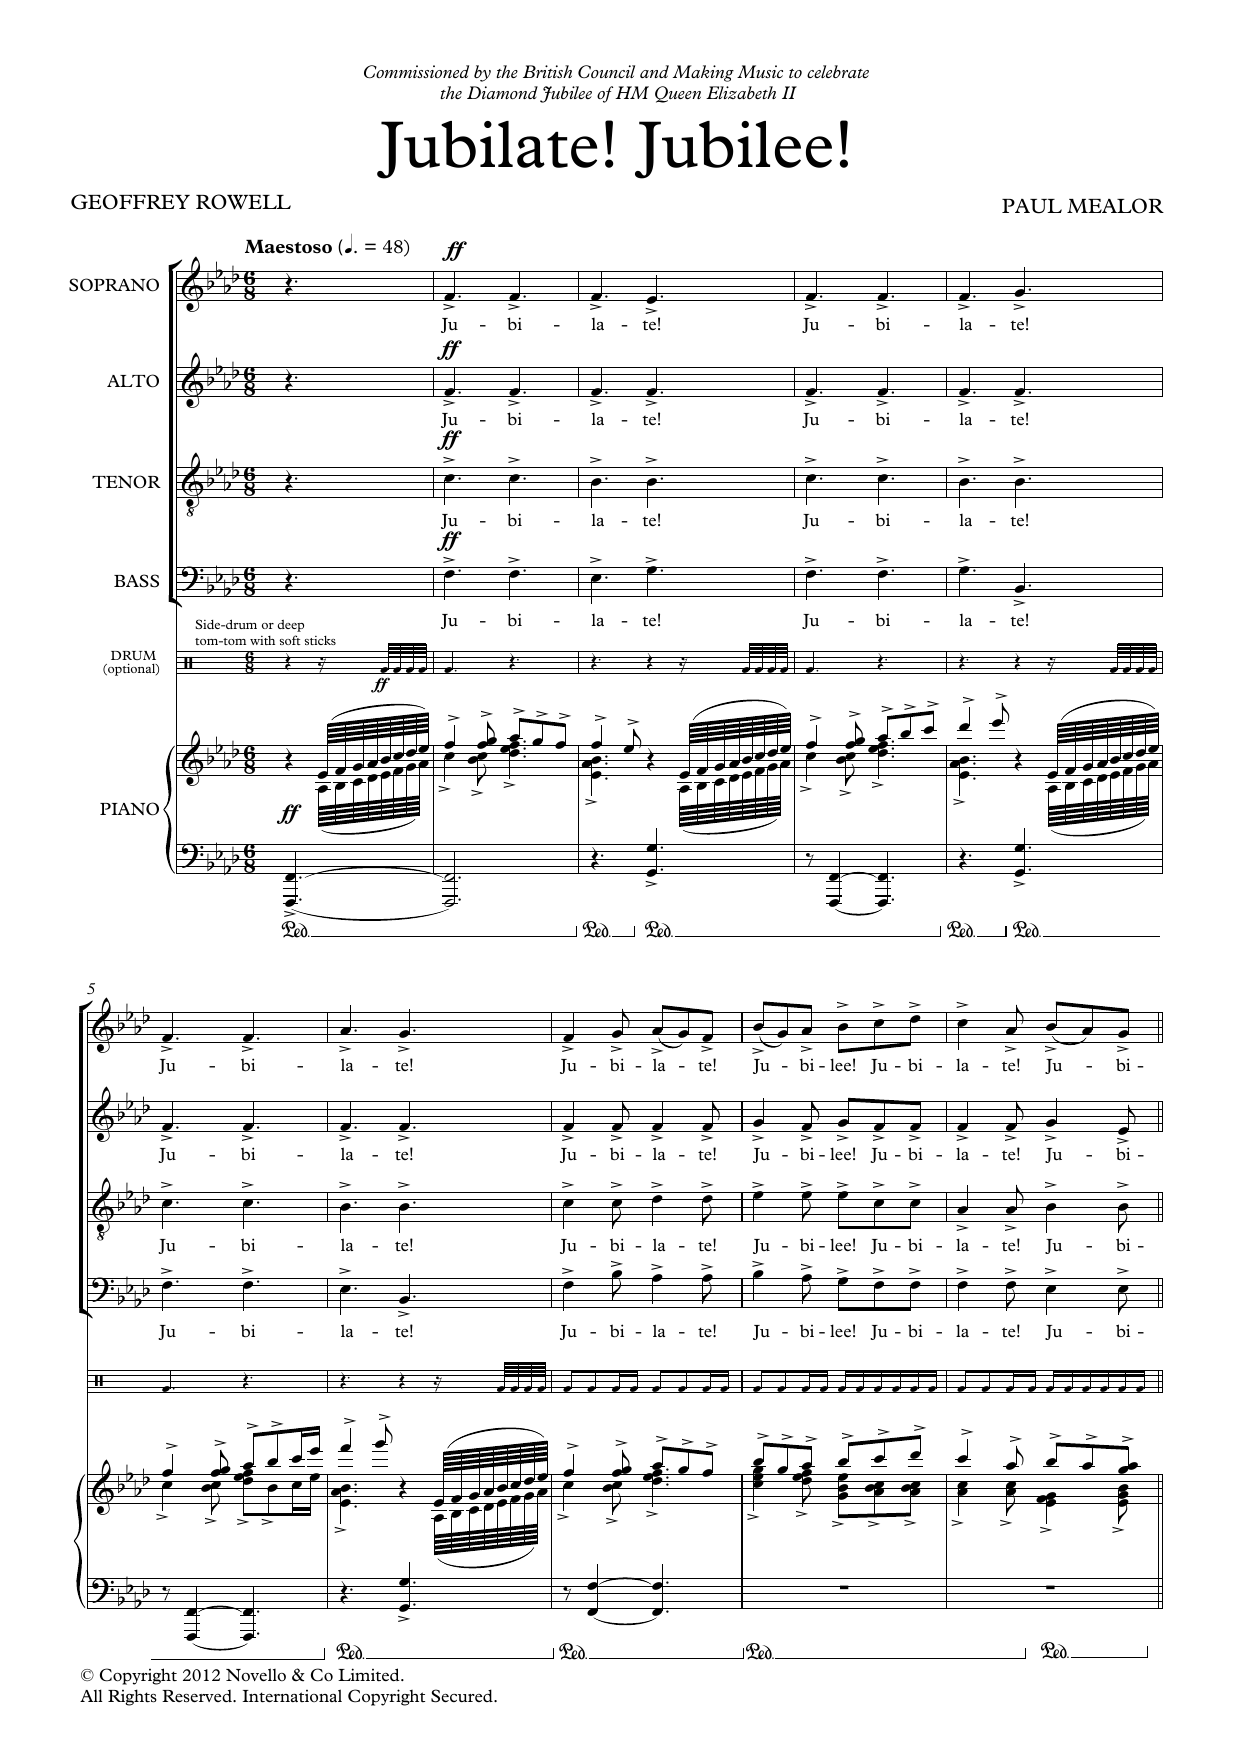 Paul Mealor Jubilate! Jubilee! Sheet Music Notes & Chords for Choir - Download or Print PDF